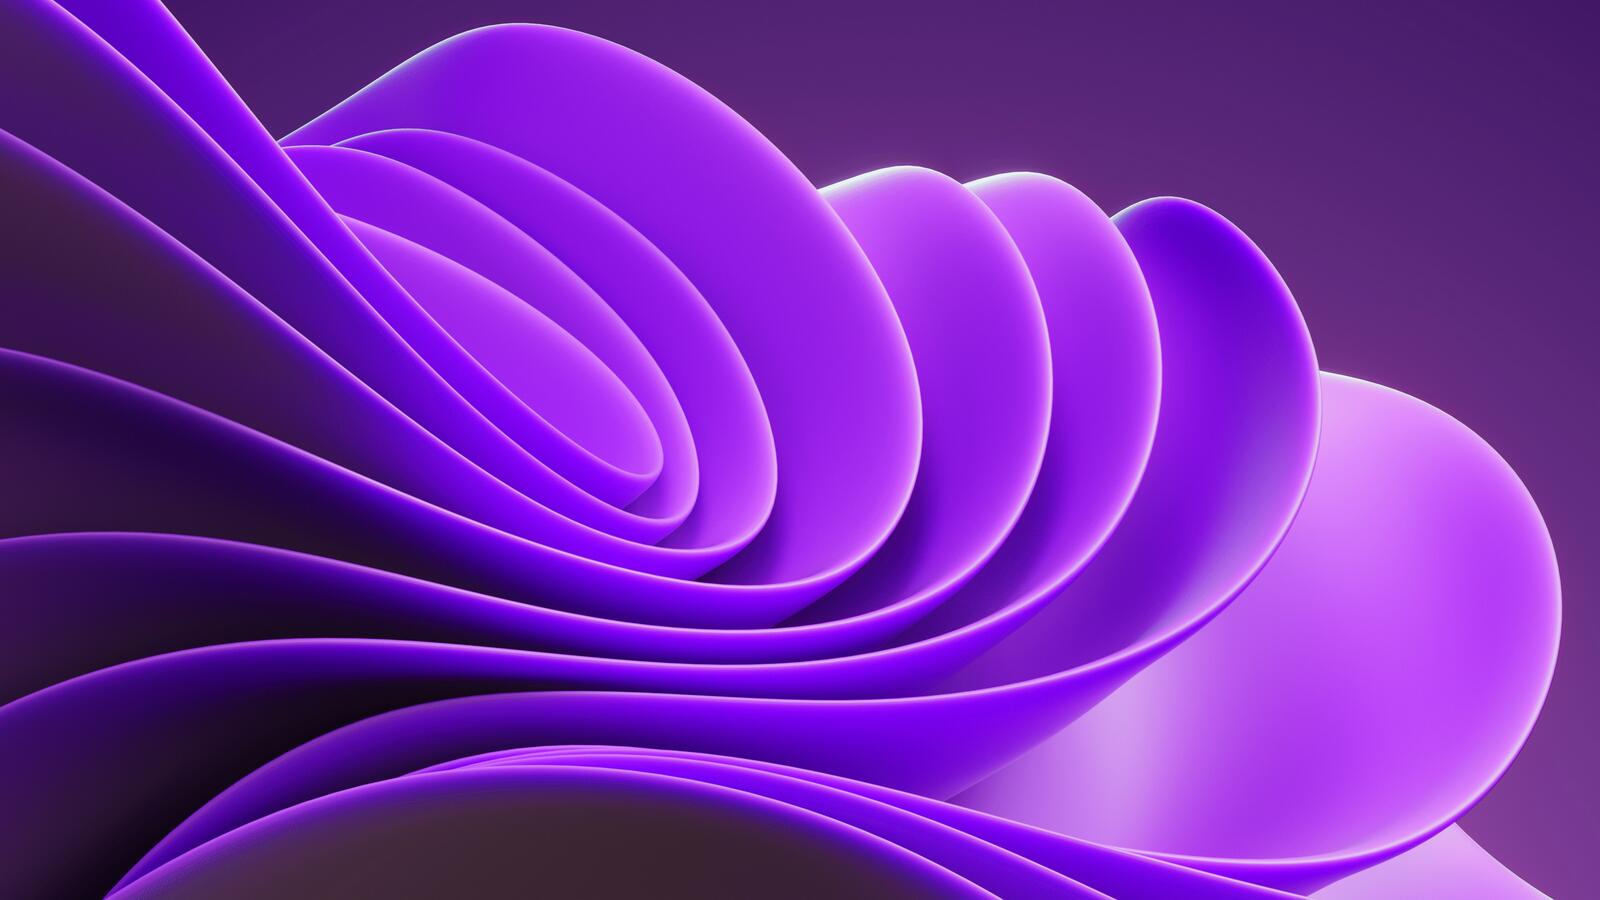 Free photo Big purple waves on a purple background